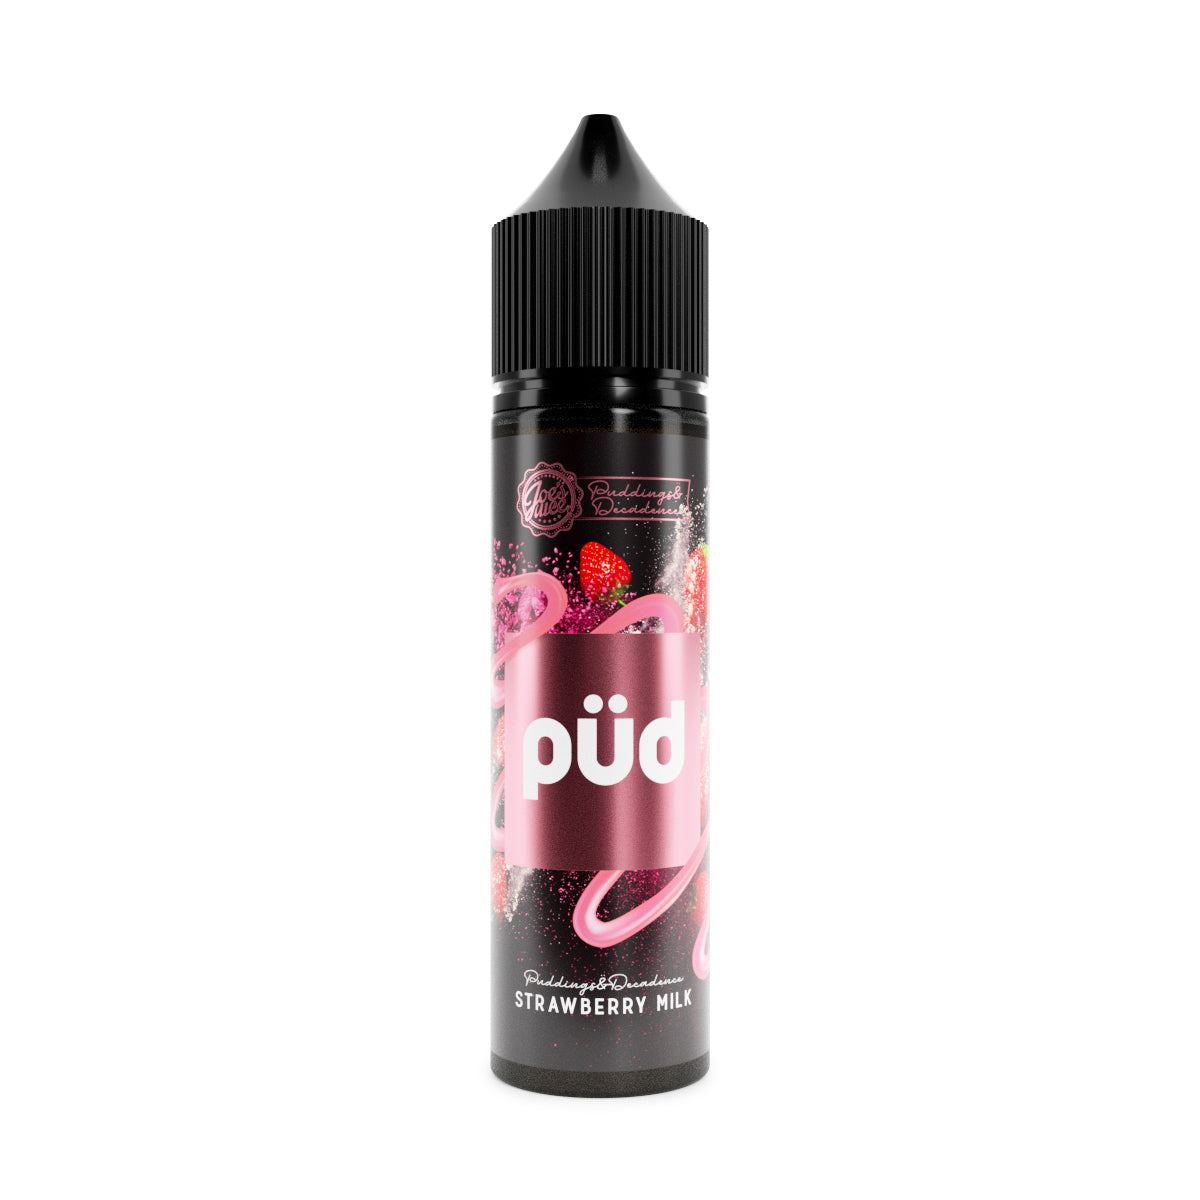 Pud Pudding & Decadence Strawberry Milk 0mg 50ml Shortfill E-Liquid